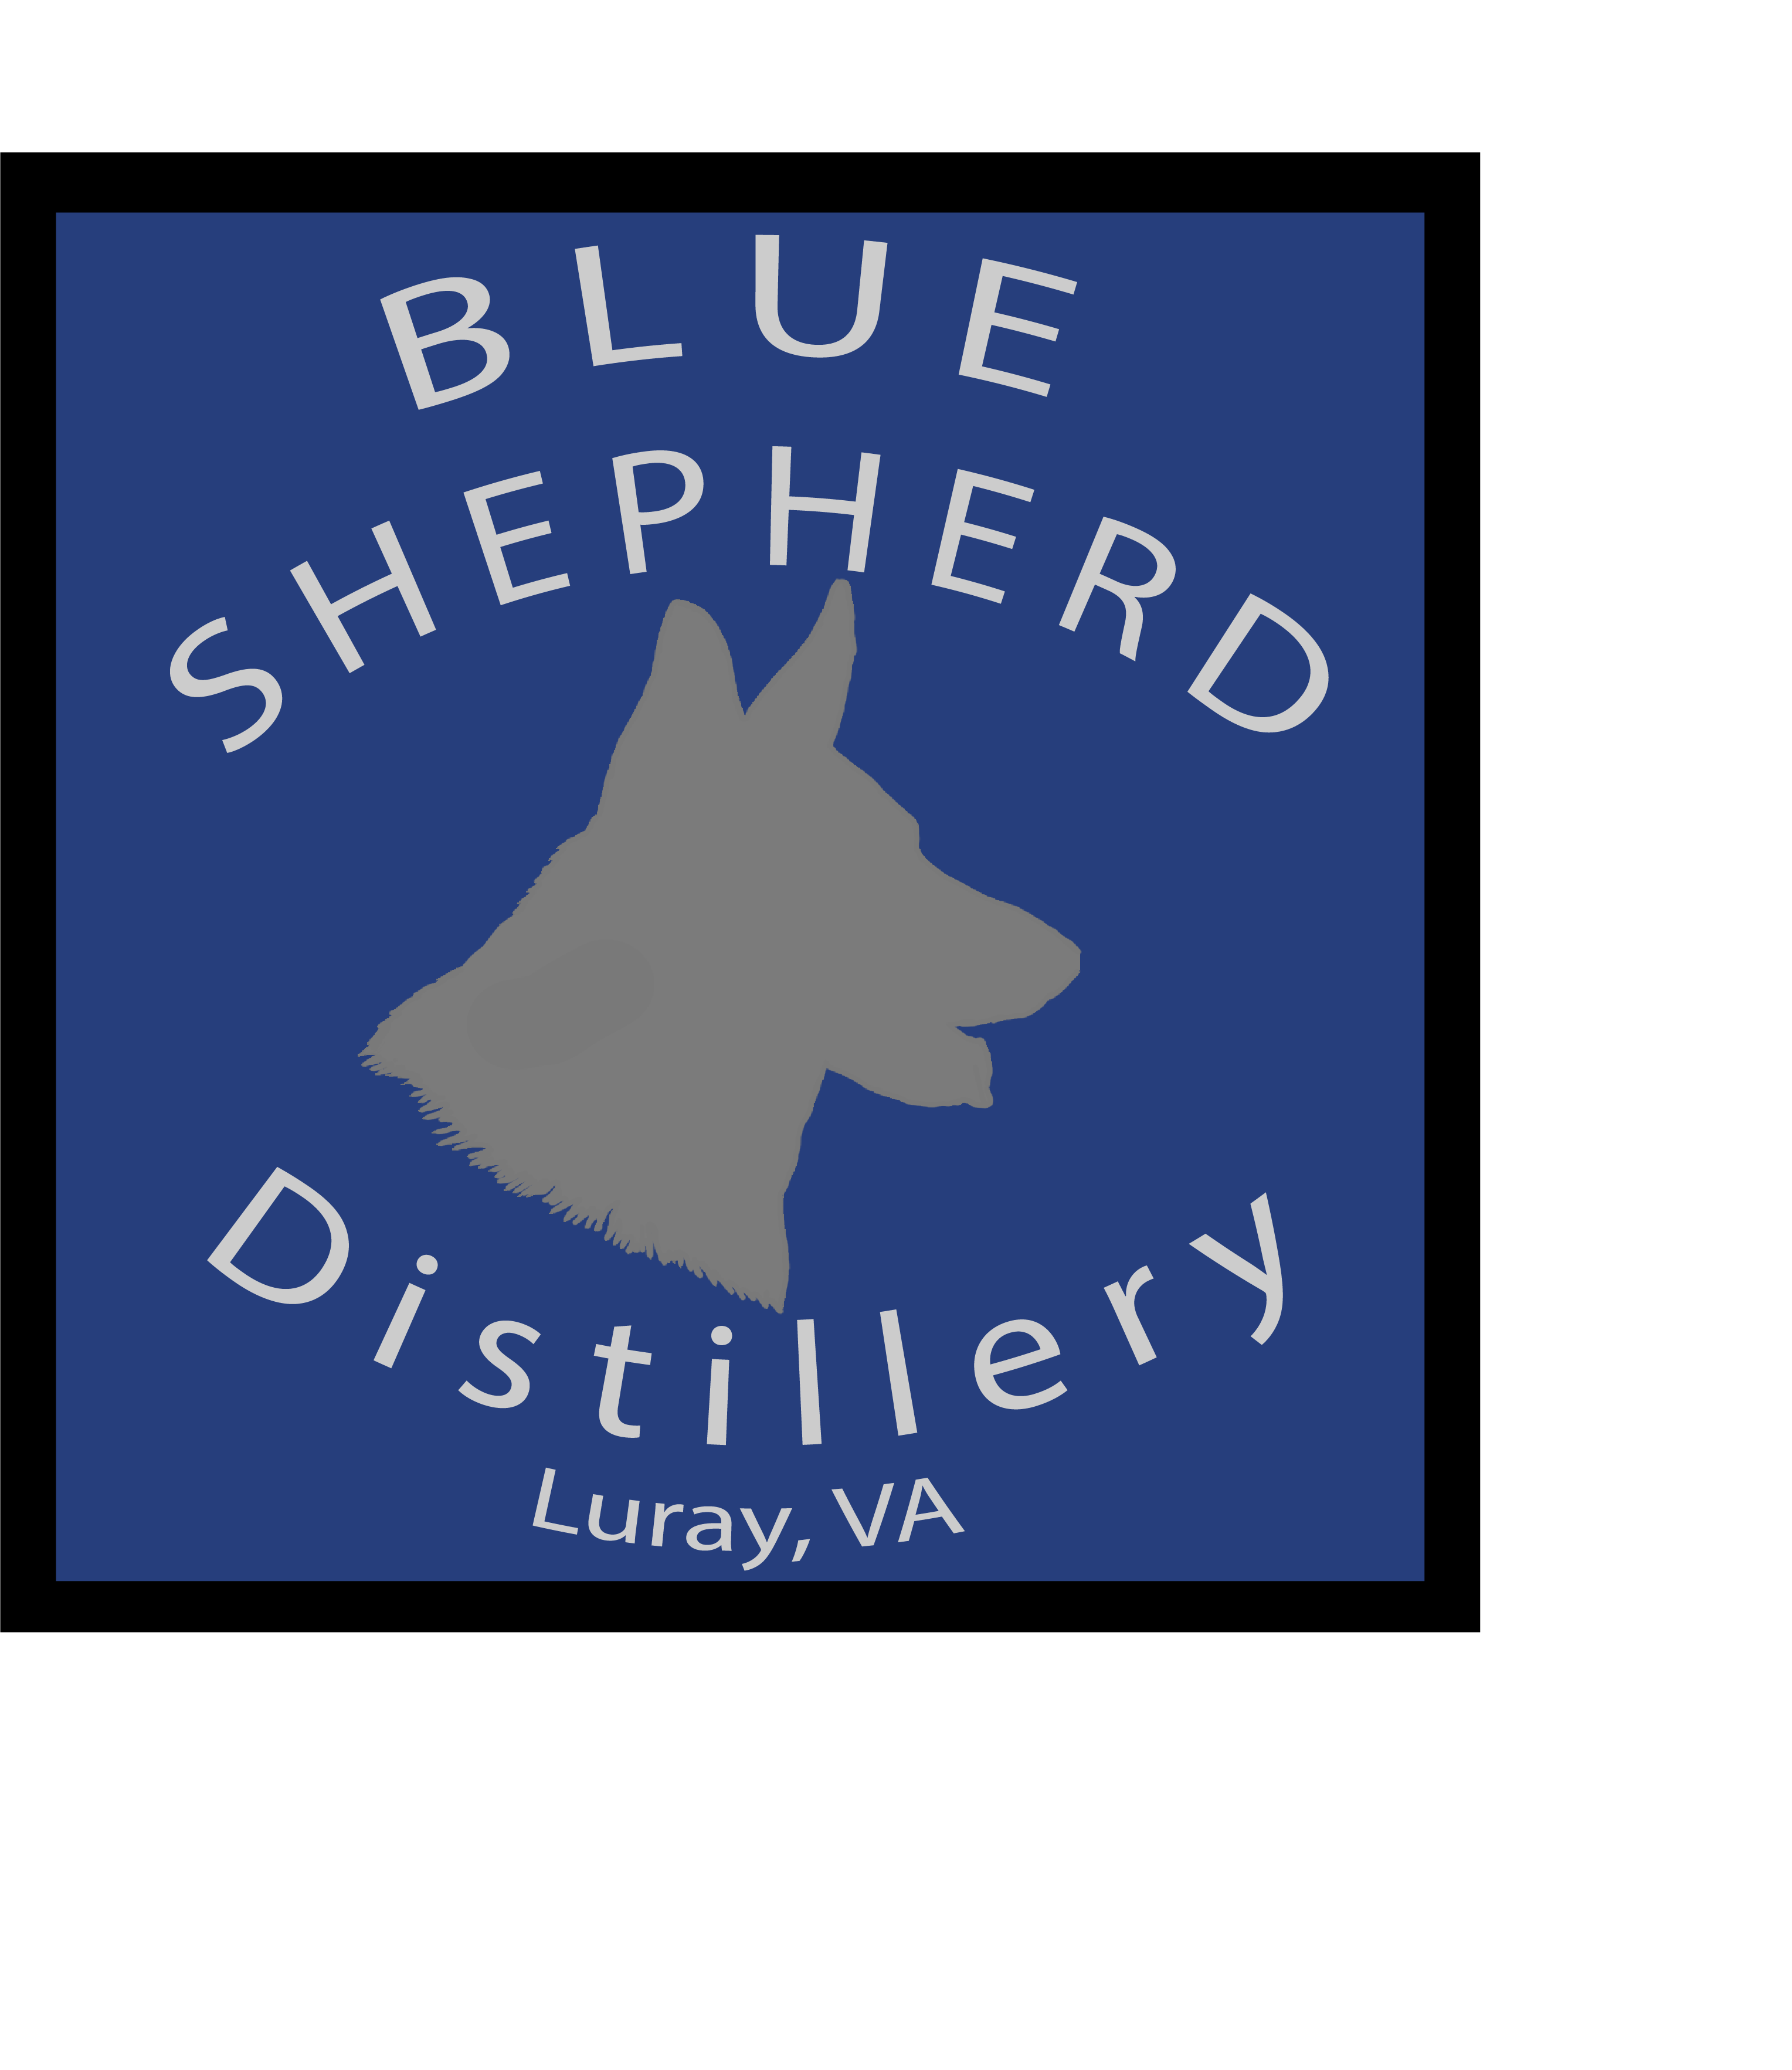 Blue Shepherd Spirits Photo